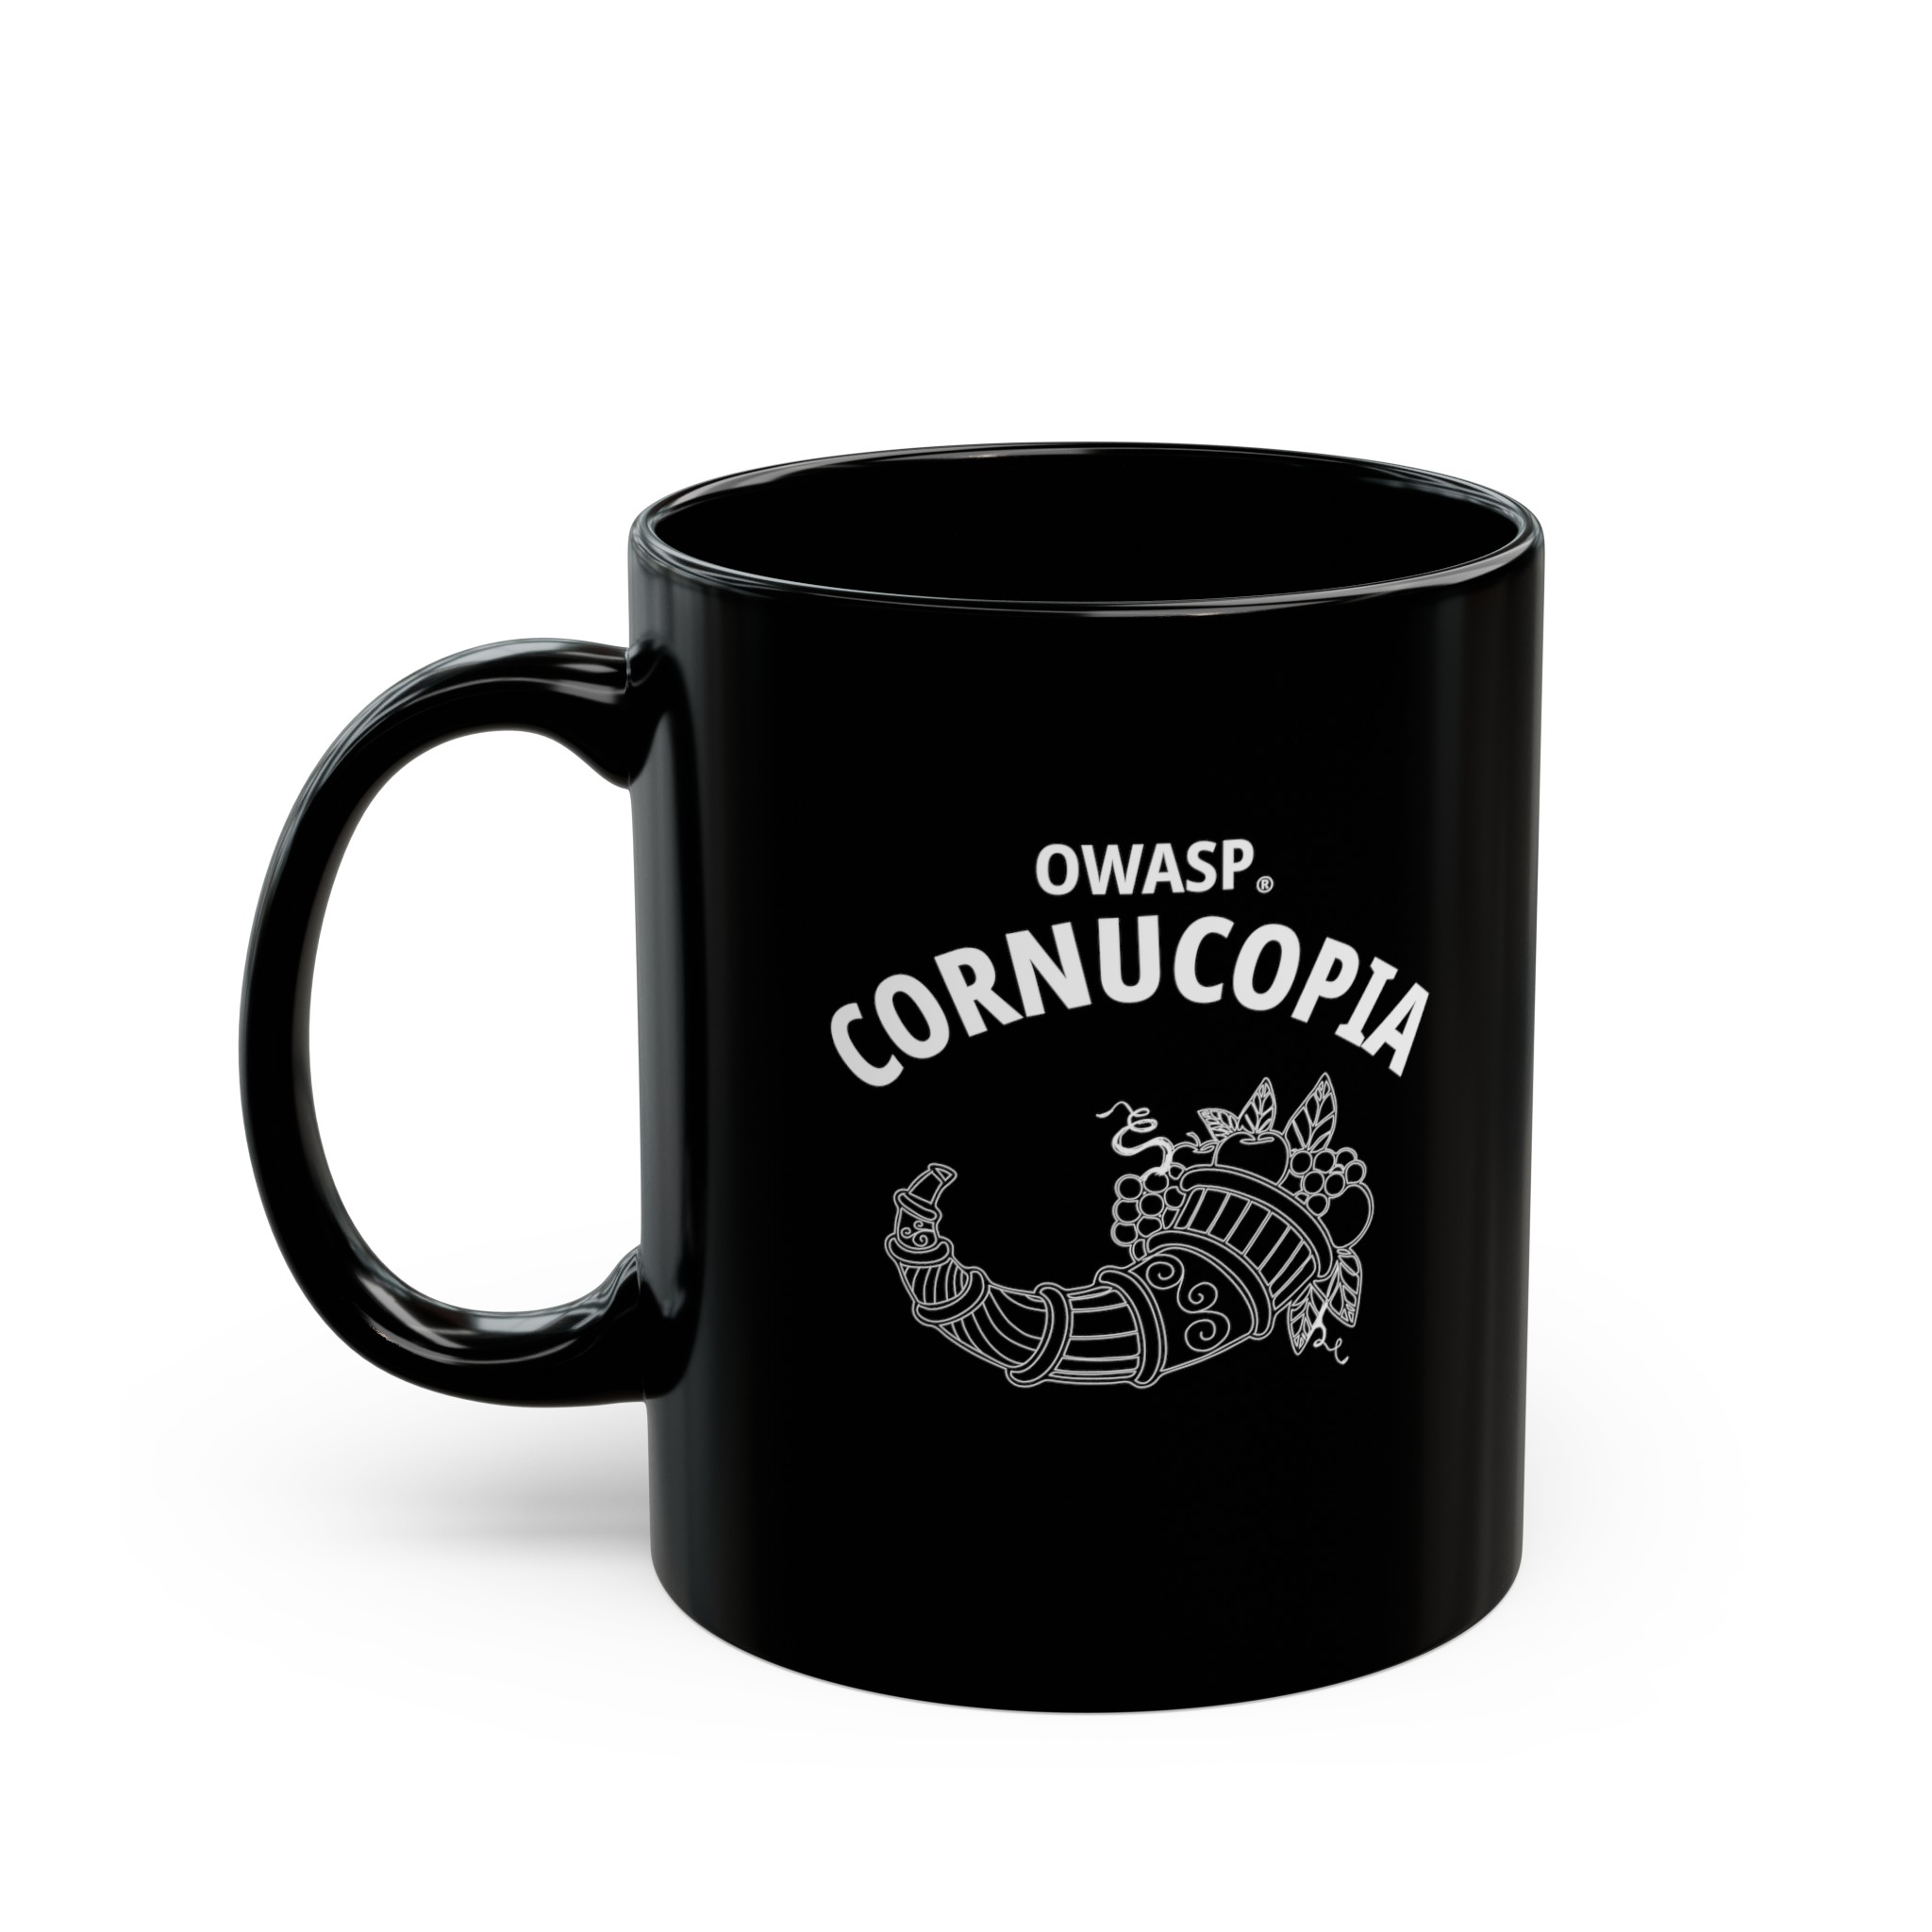 Cornucopia coffe cup